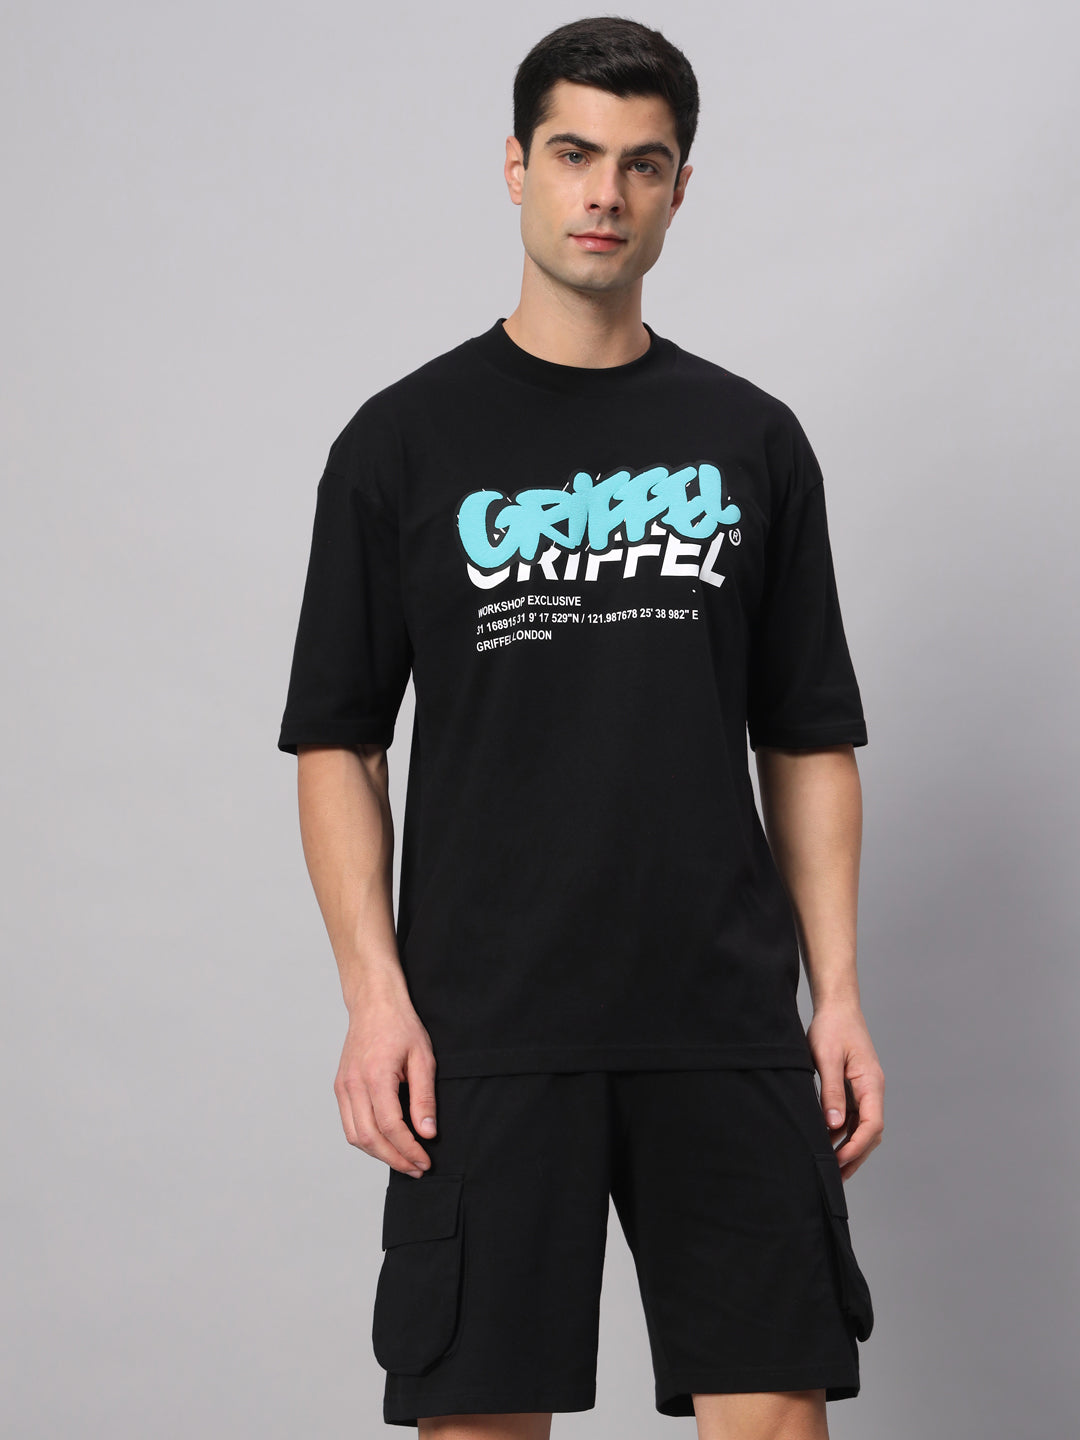 PUFF LOGO T-shirt and Shorts Set - griffel